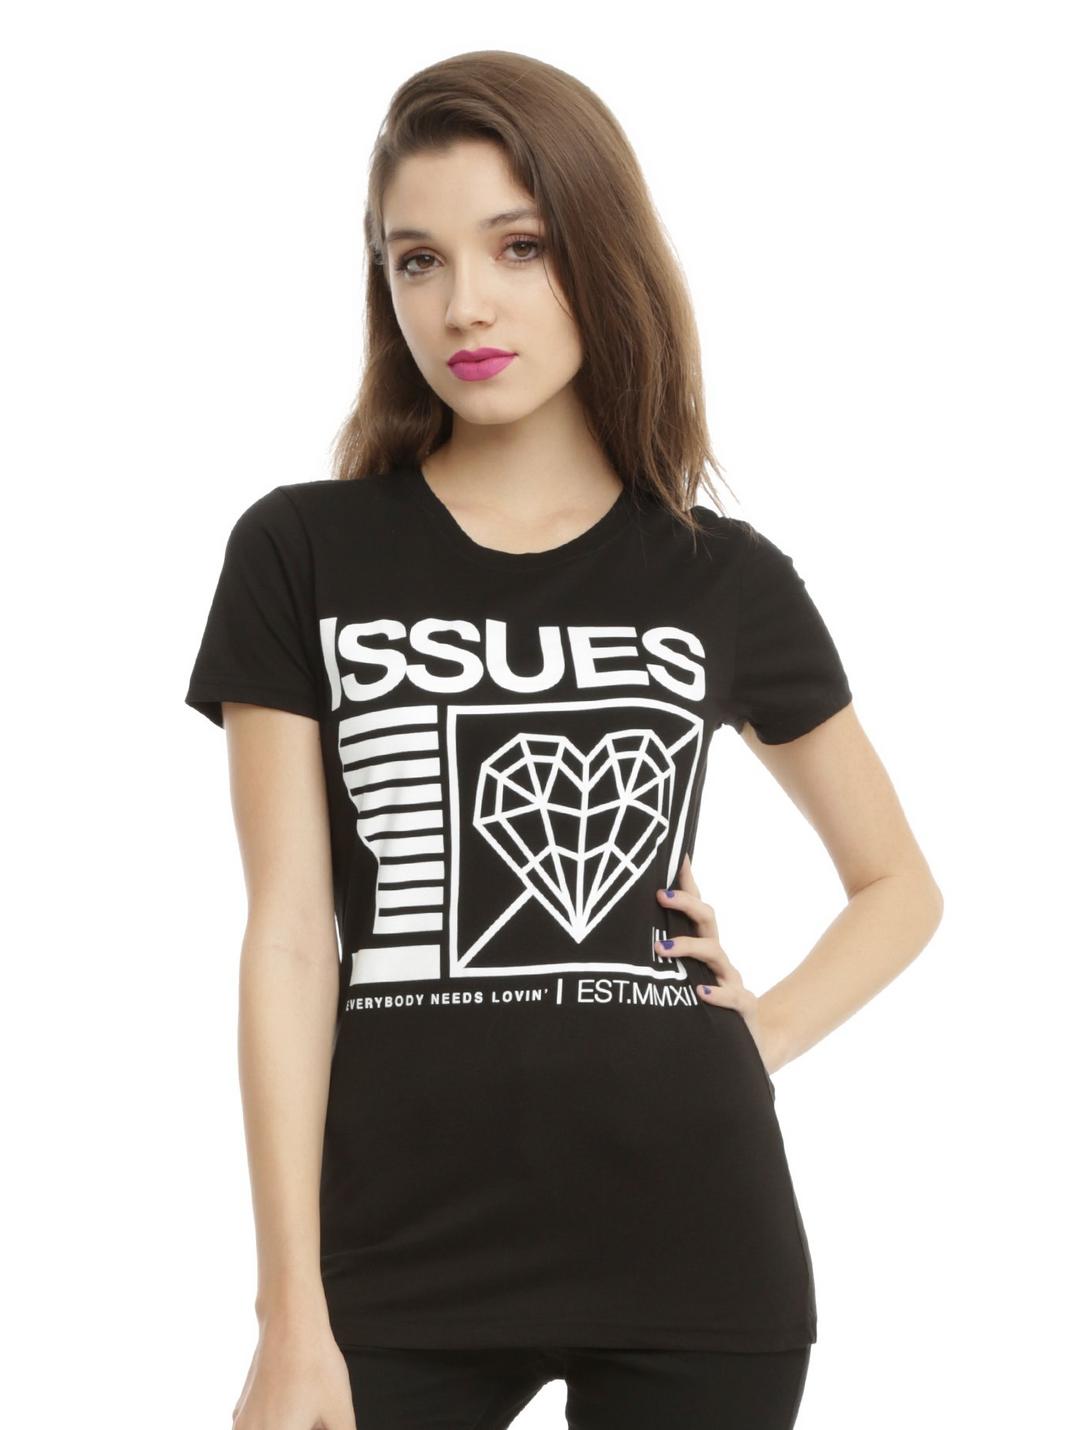 Issues Everybody Needs Lovin' Girls T-Shirt, , hi-res